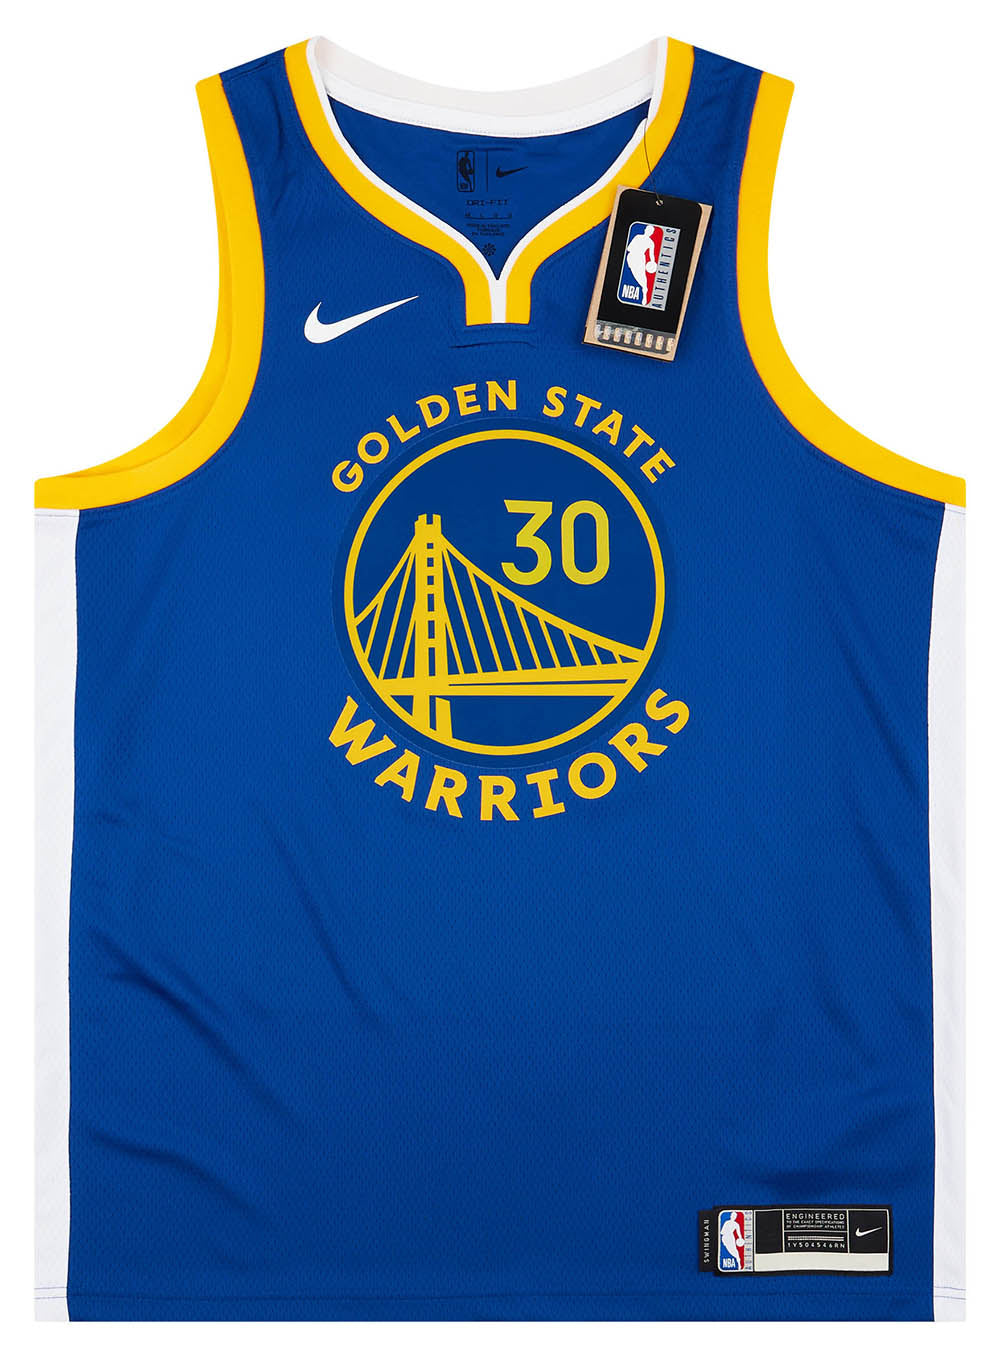 30 Stephen Curry The Town Blue Golden State Warriors shirt